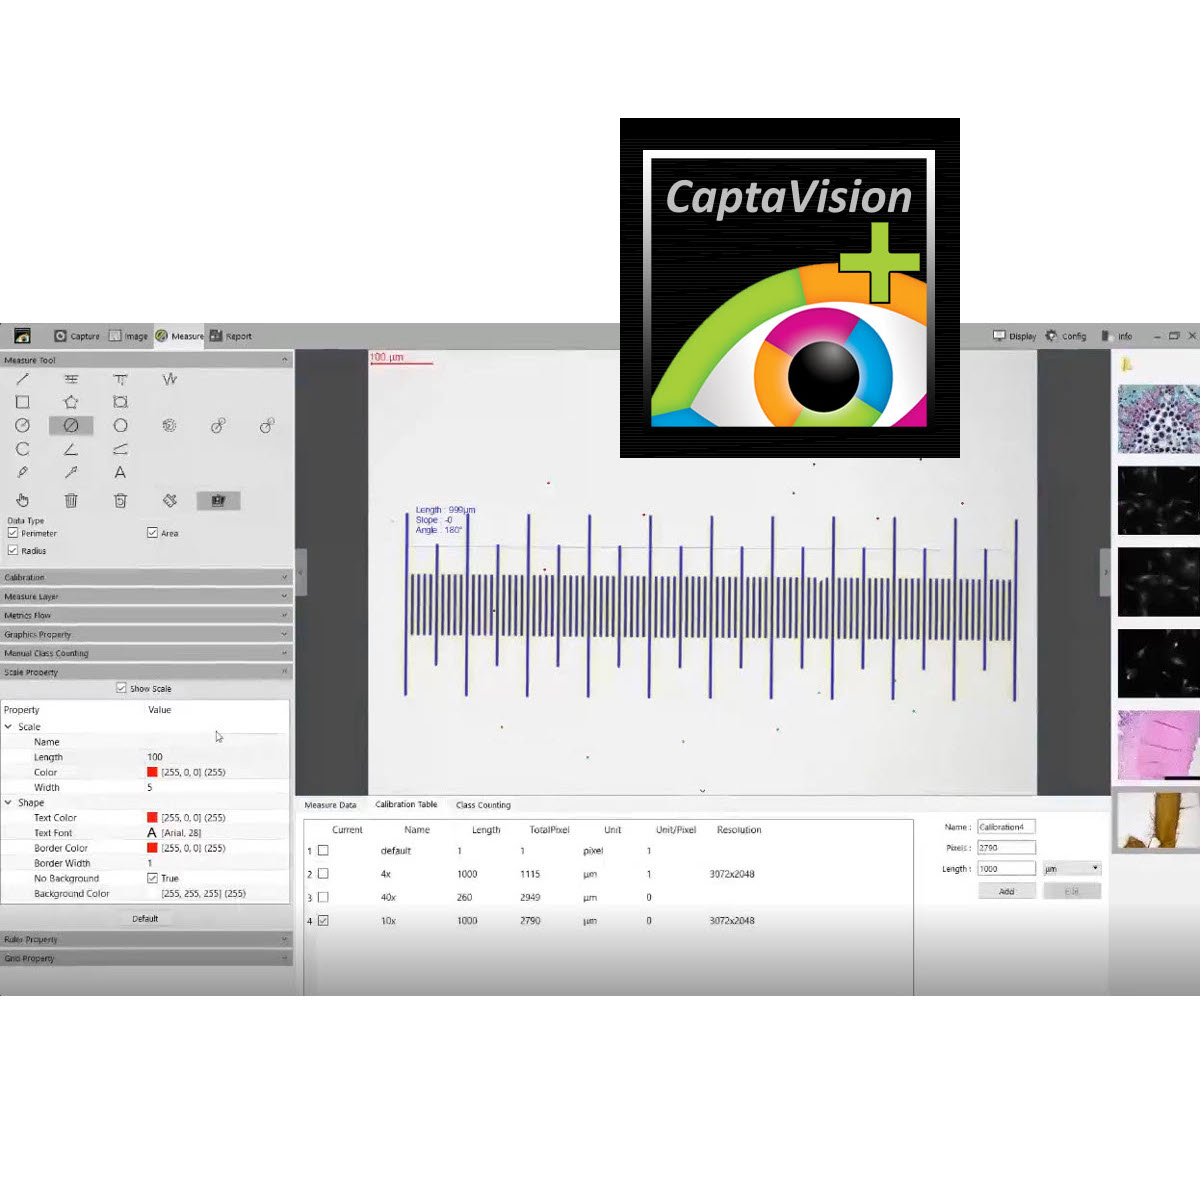 CaptaVision+ software interface